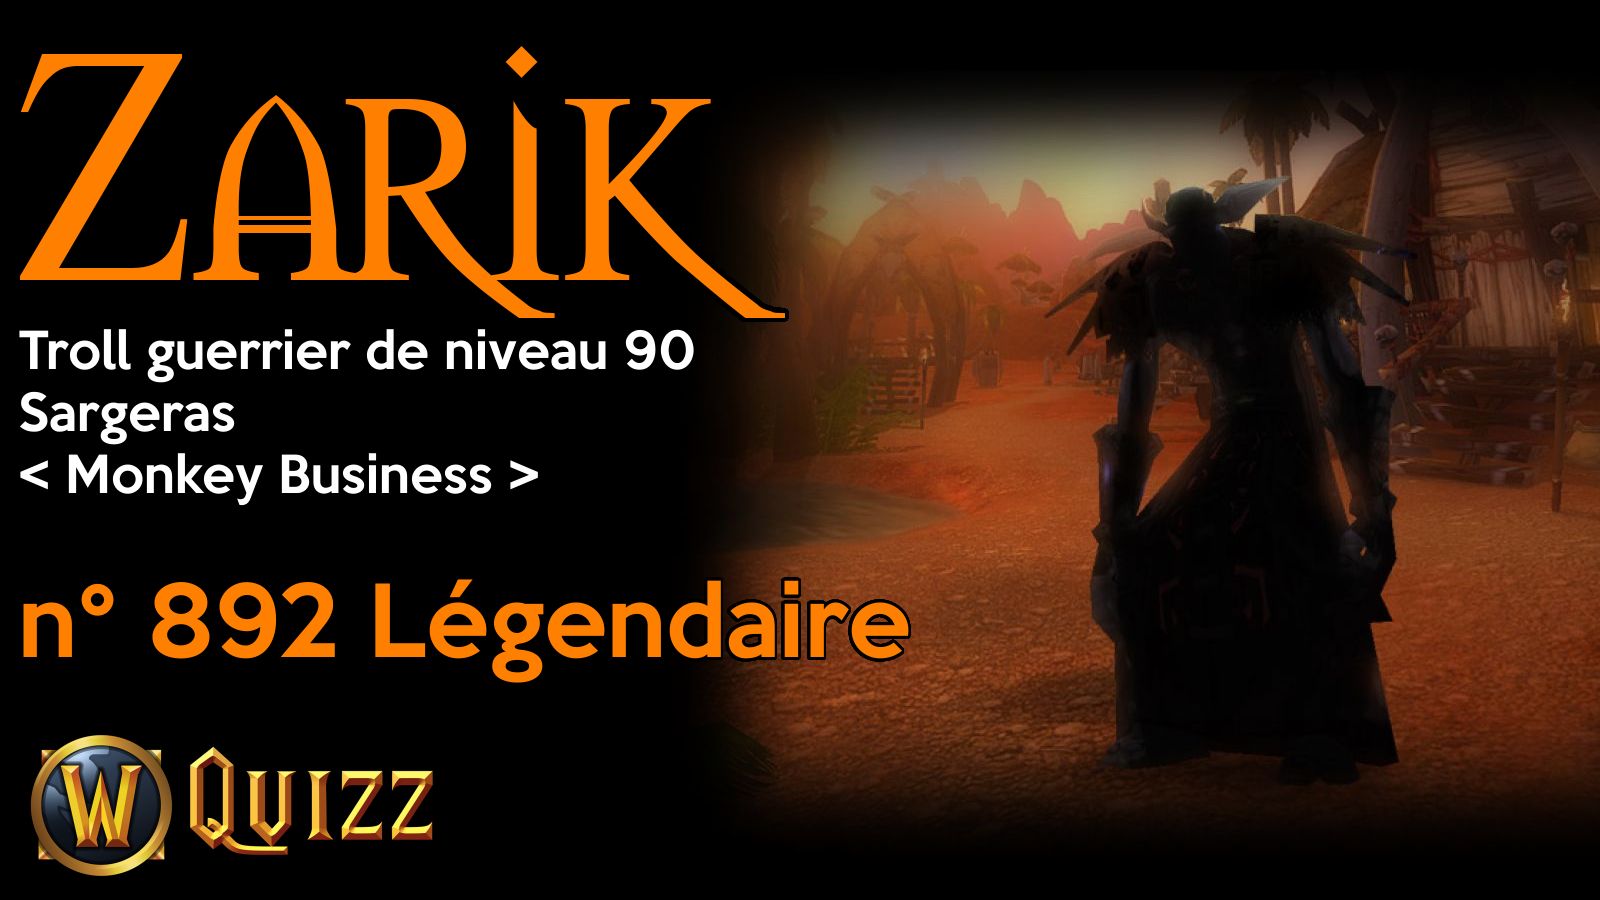 Zarik, Troll guerrier de niveau 90, Sargeras